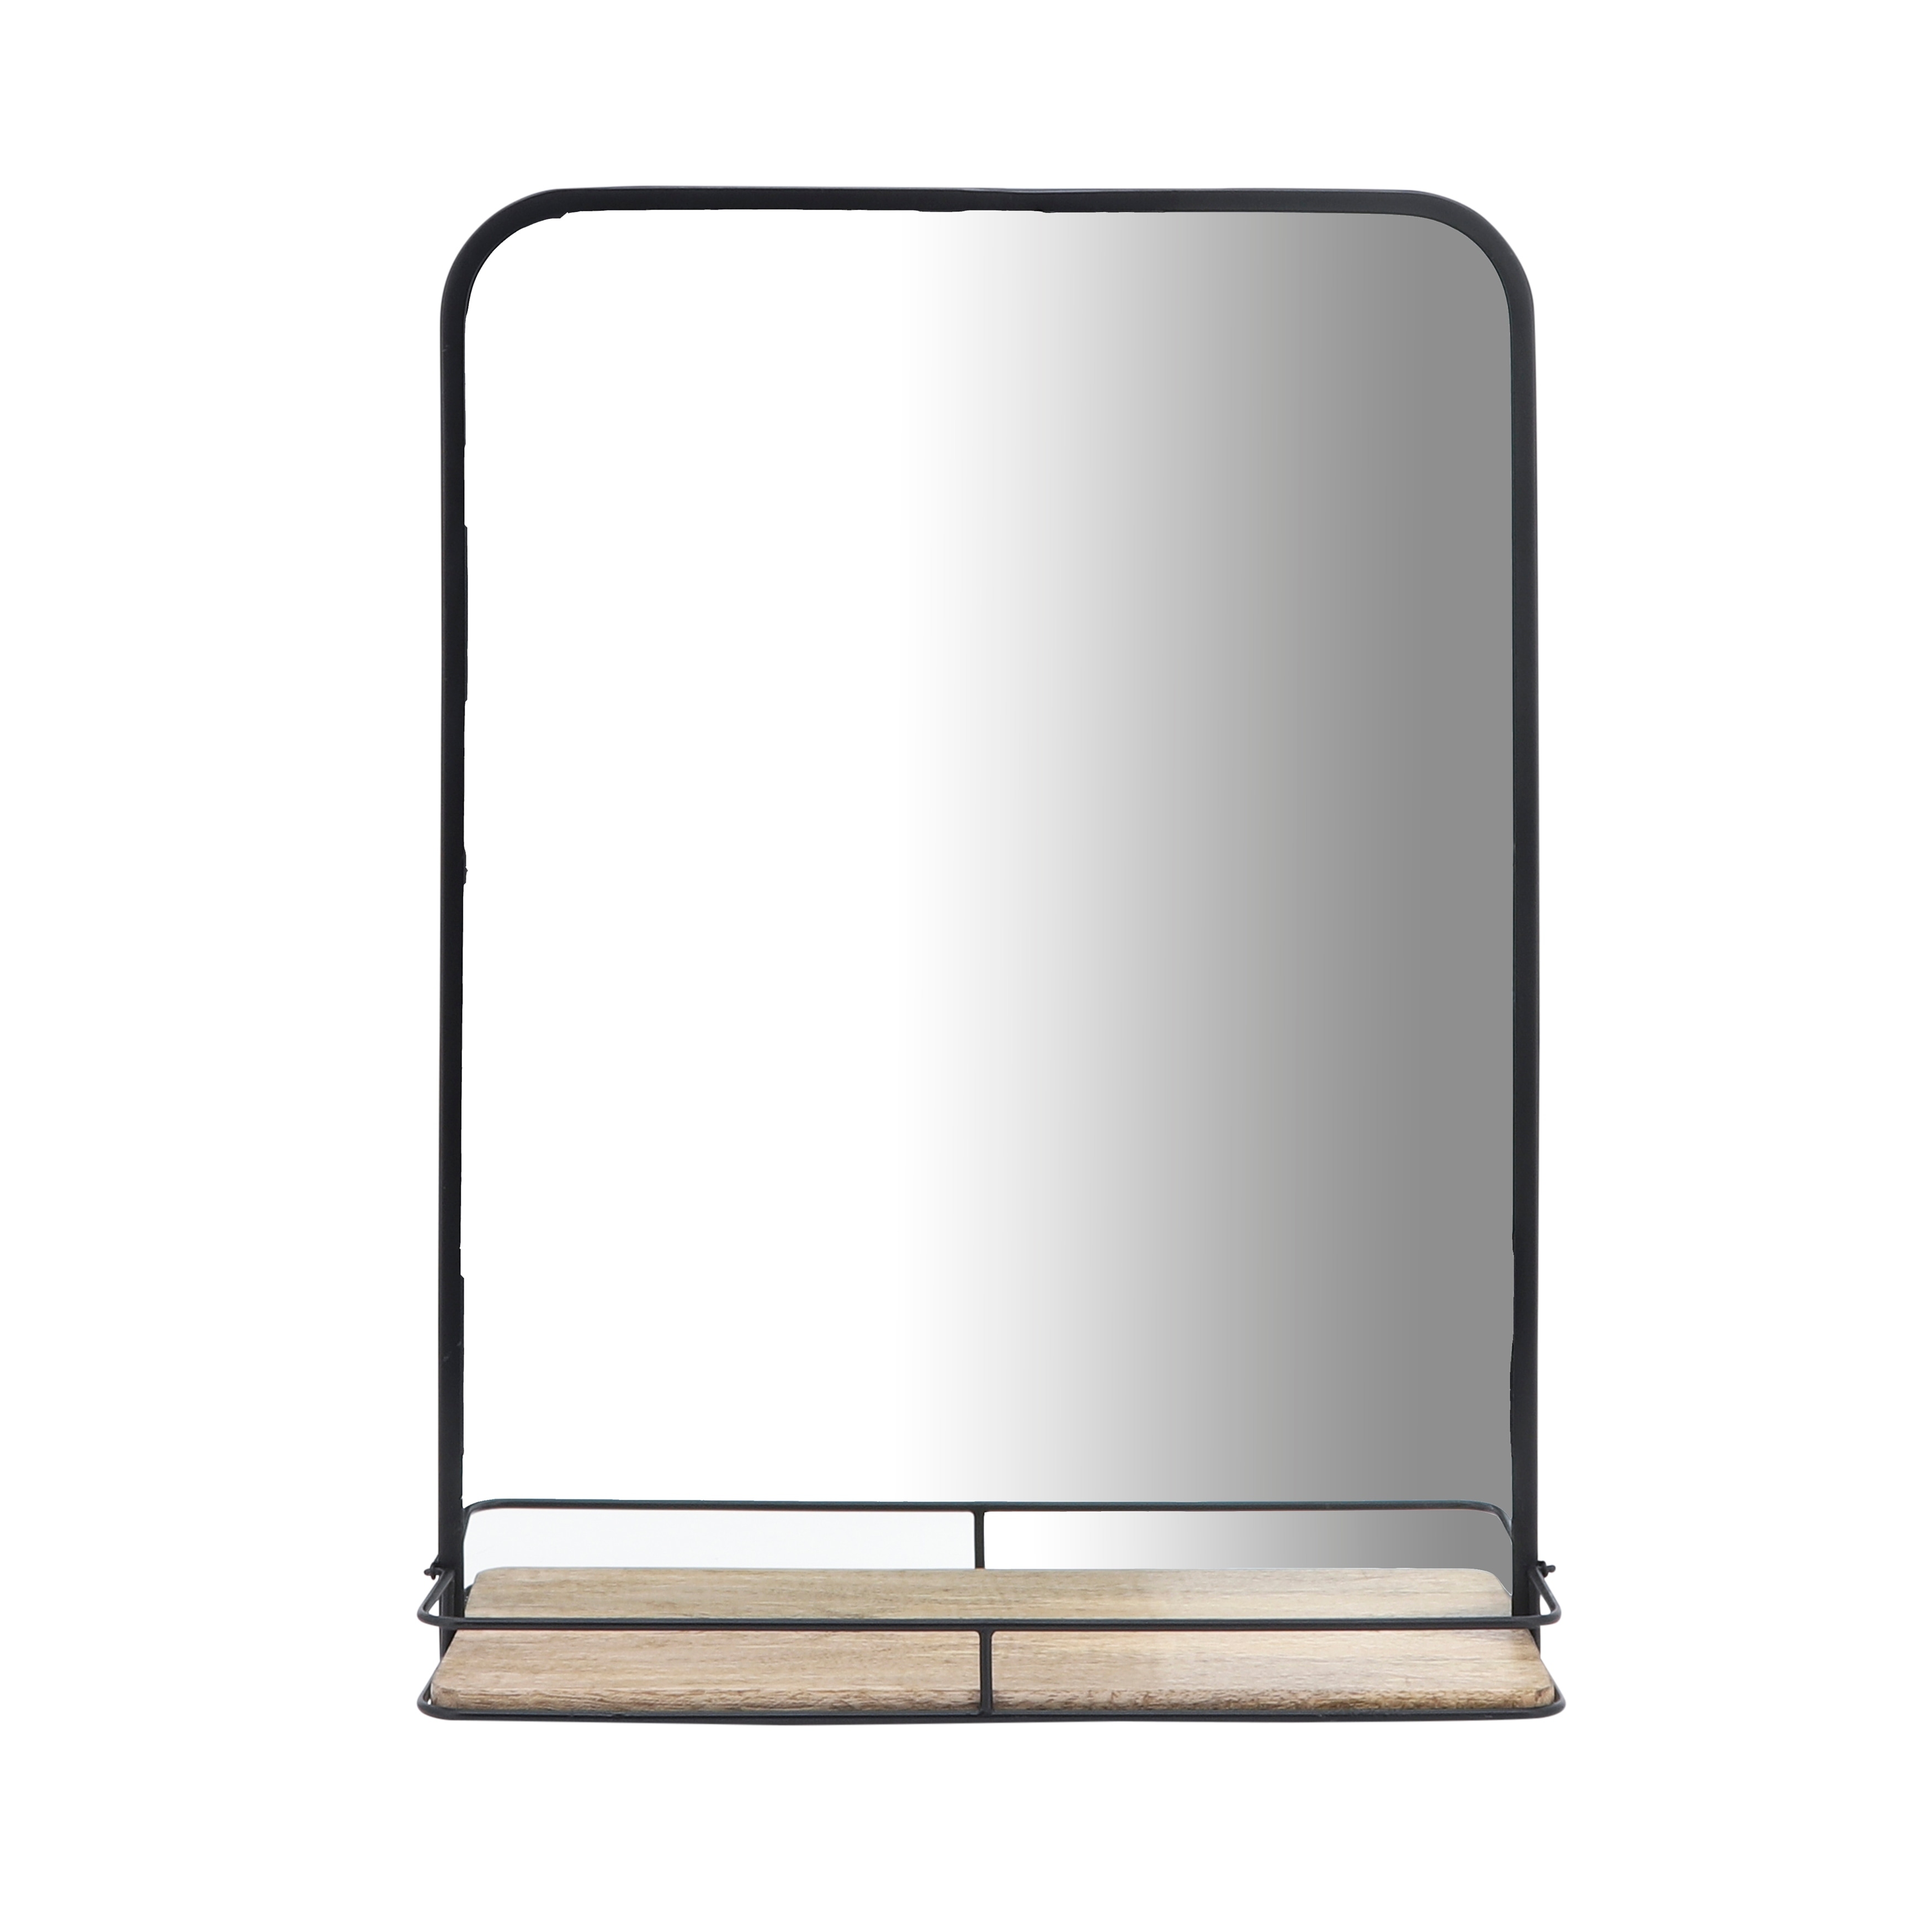 How to Make a Modern Sunrise Floating Mirror + Shelf